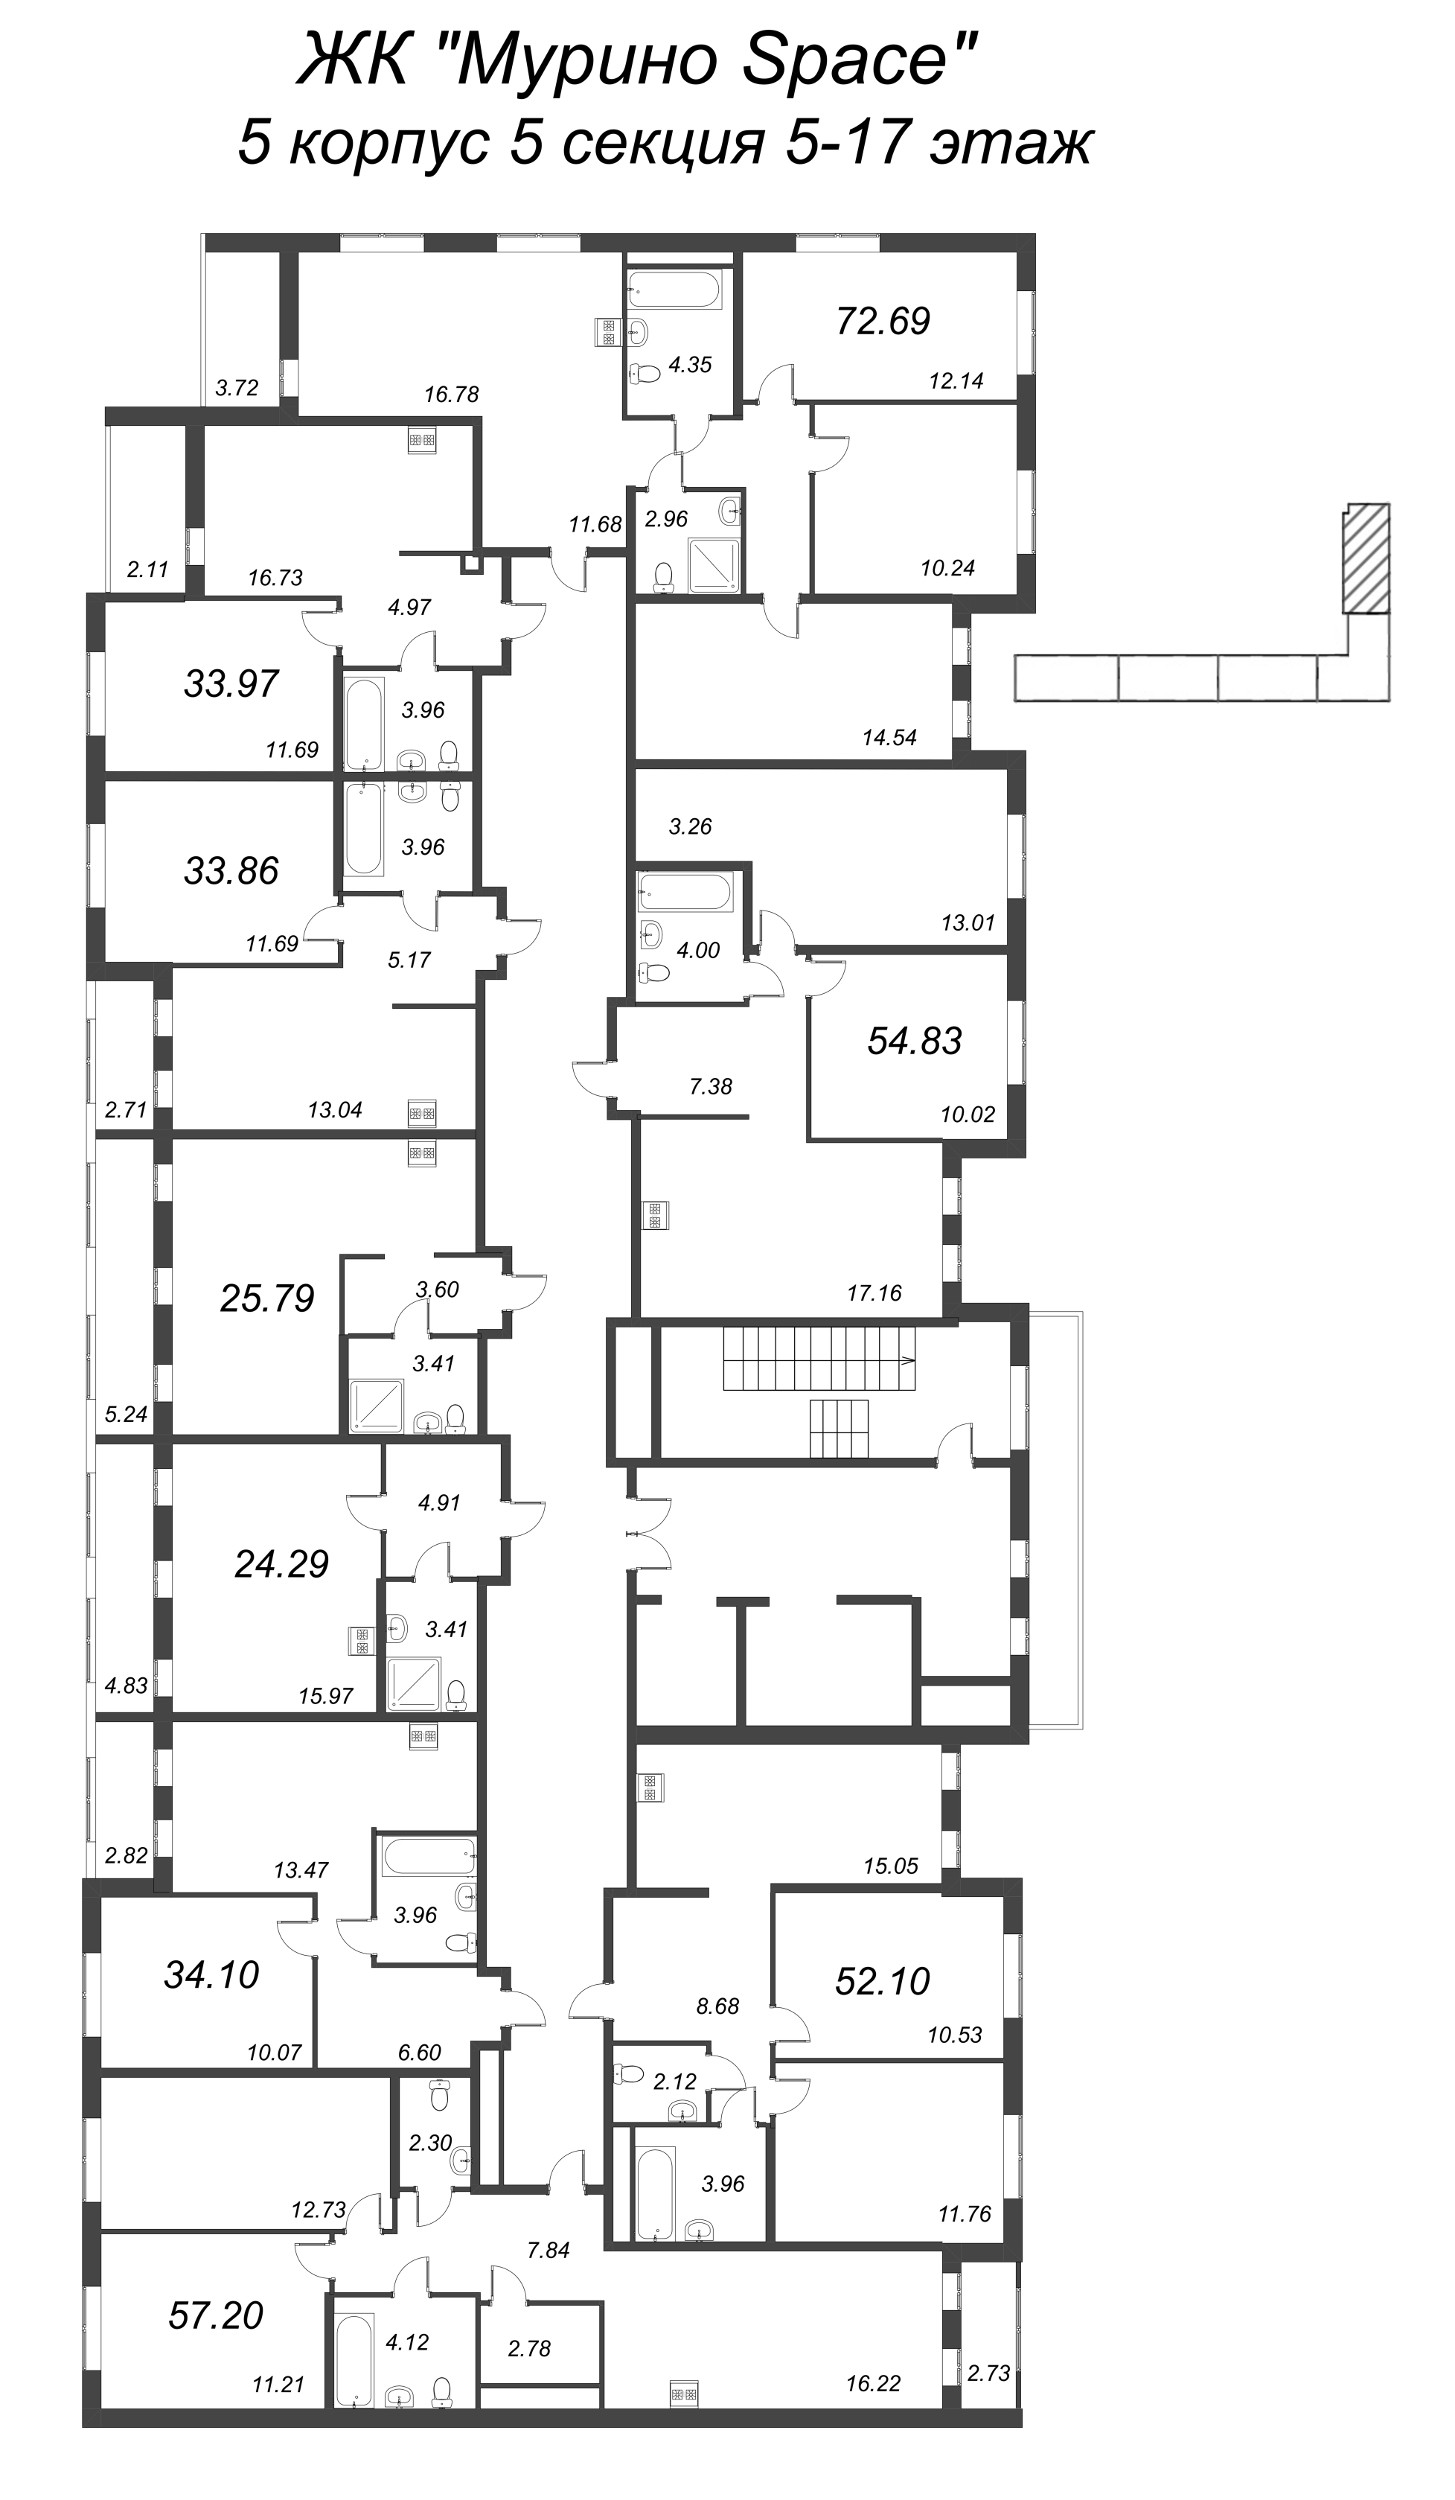 3-комнатная (Евро) квартира, 51.25 м² - планировка этажа